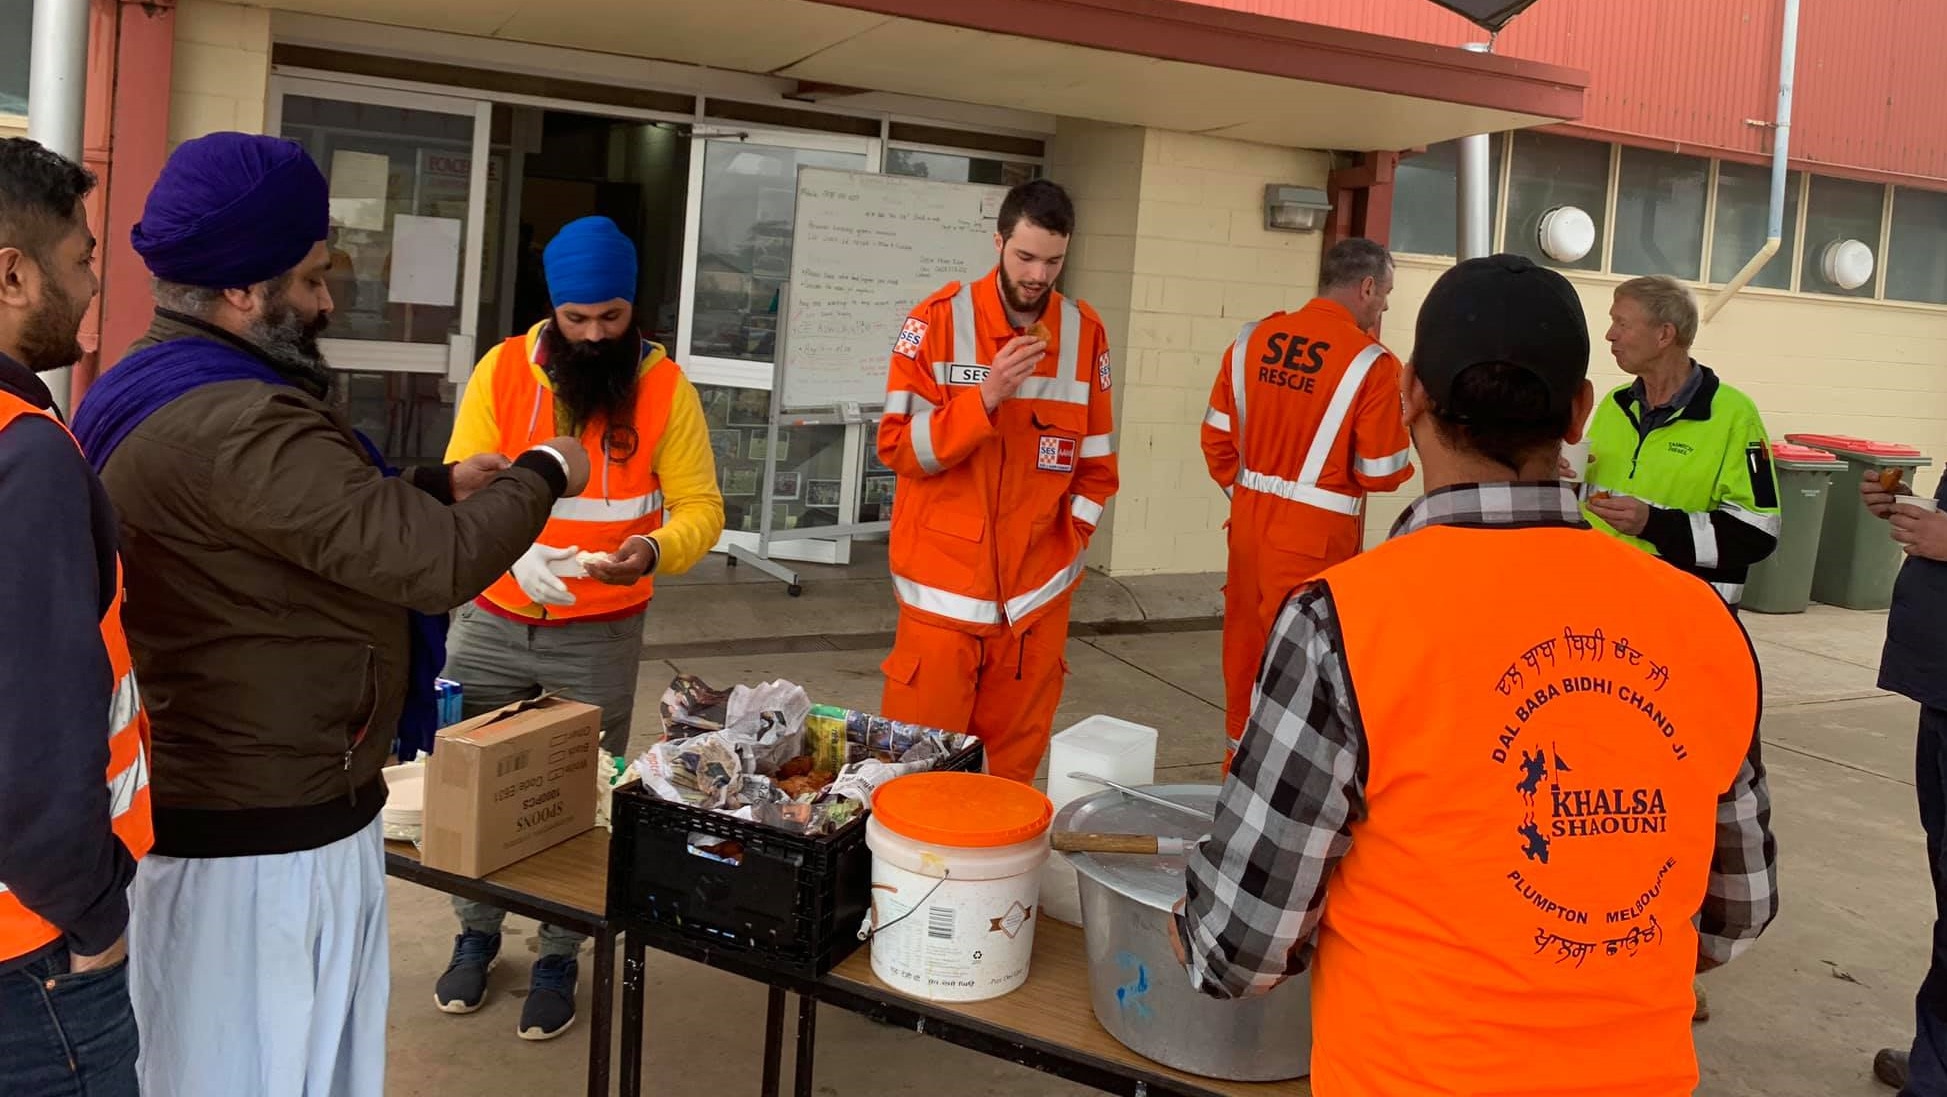 Volunteers of Khalsa Shaoni Plumpton serving food to SES workers. 